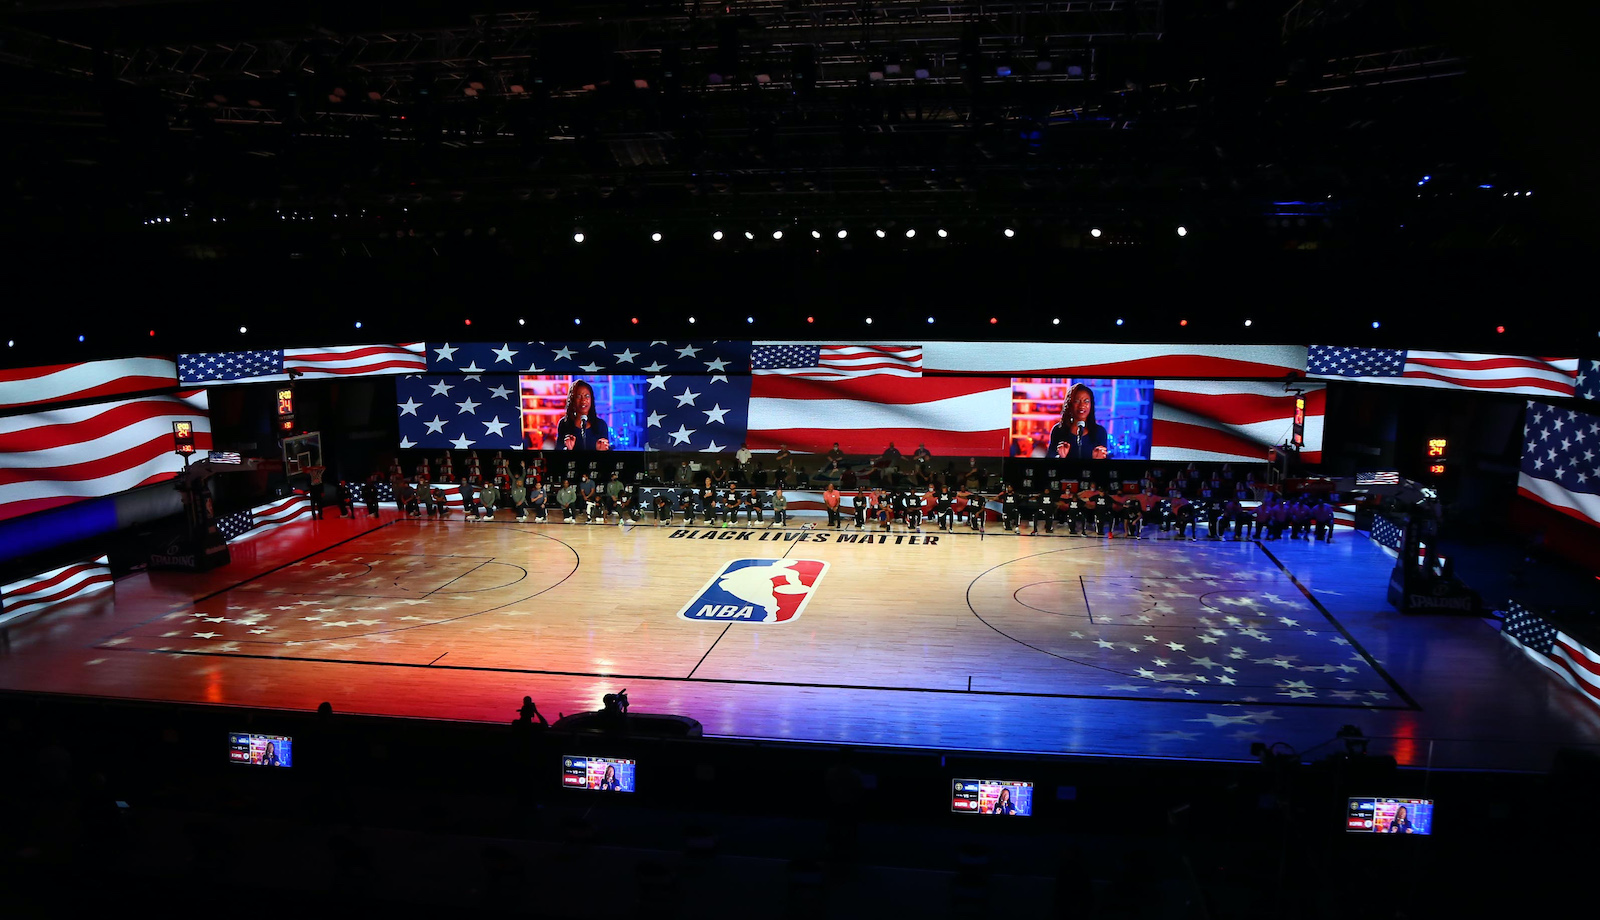 35 HQ Images Nba Playoff Stream Online Free : Celtics vs Raptors live stream: 2020 NBA Playoffs game ...